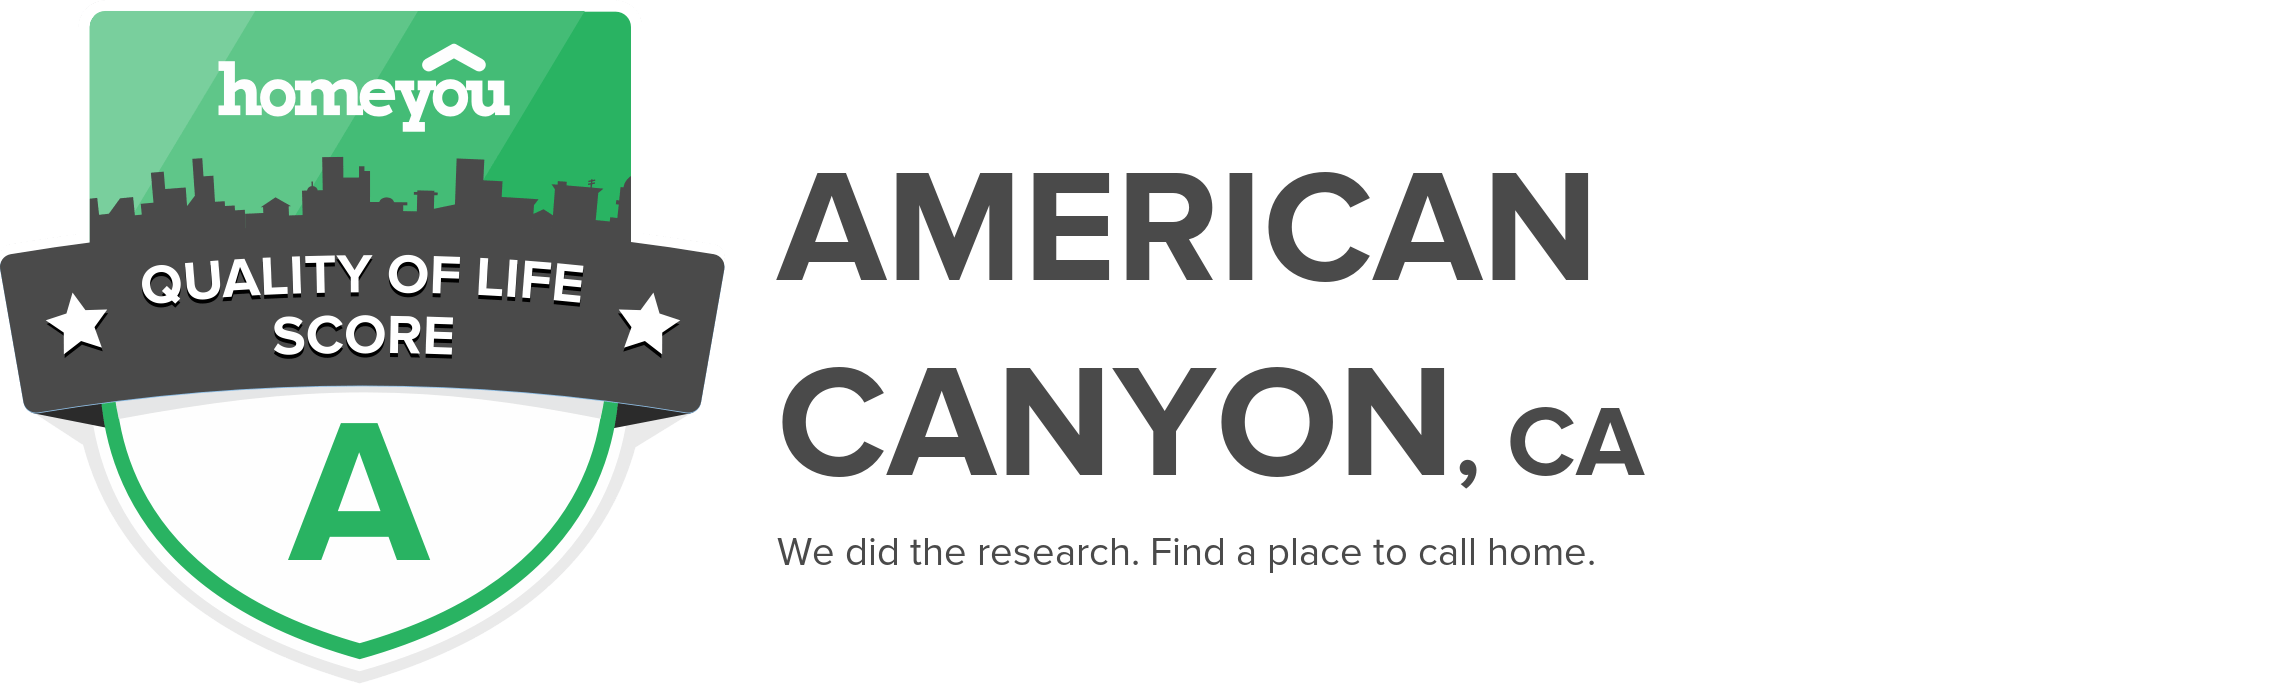 American Canyon, CA